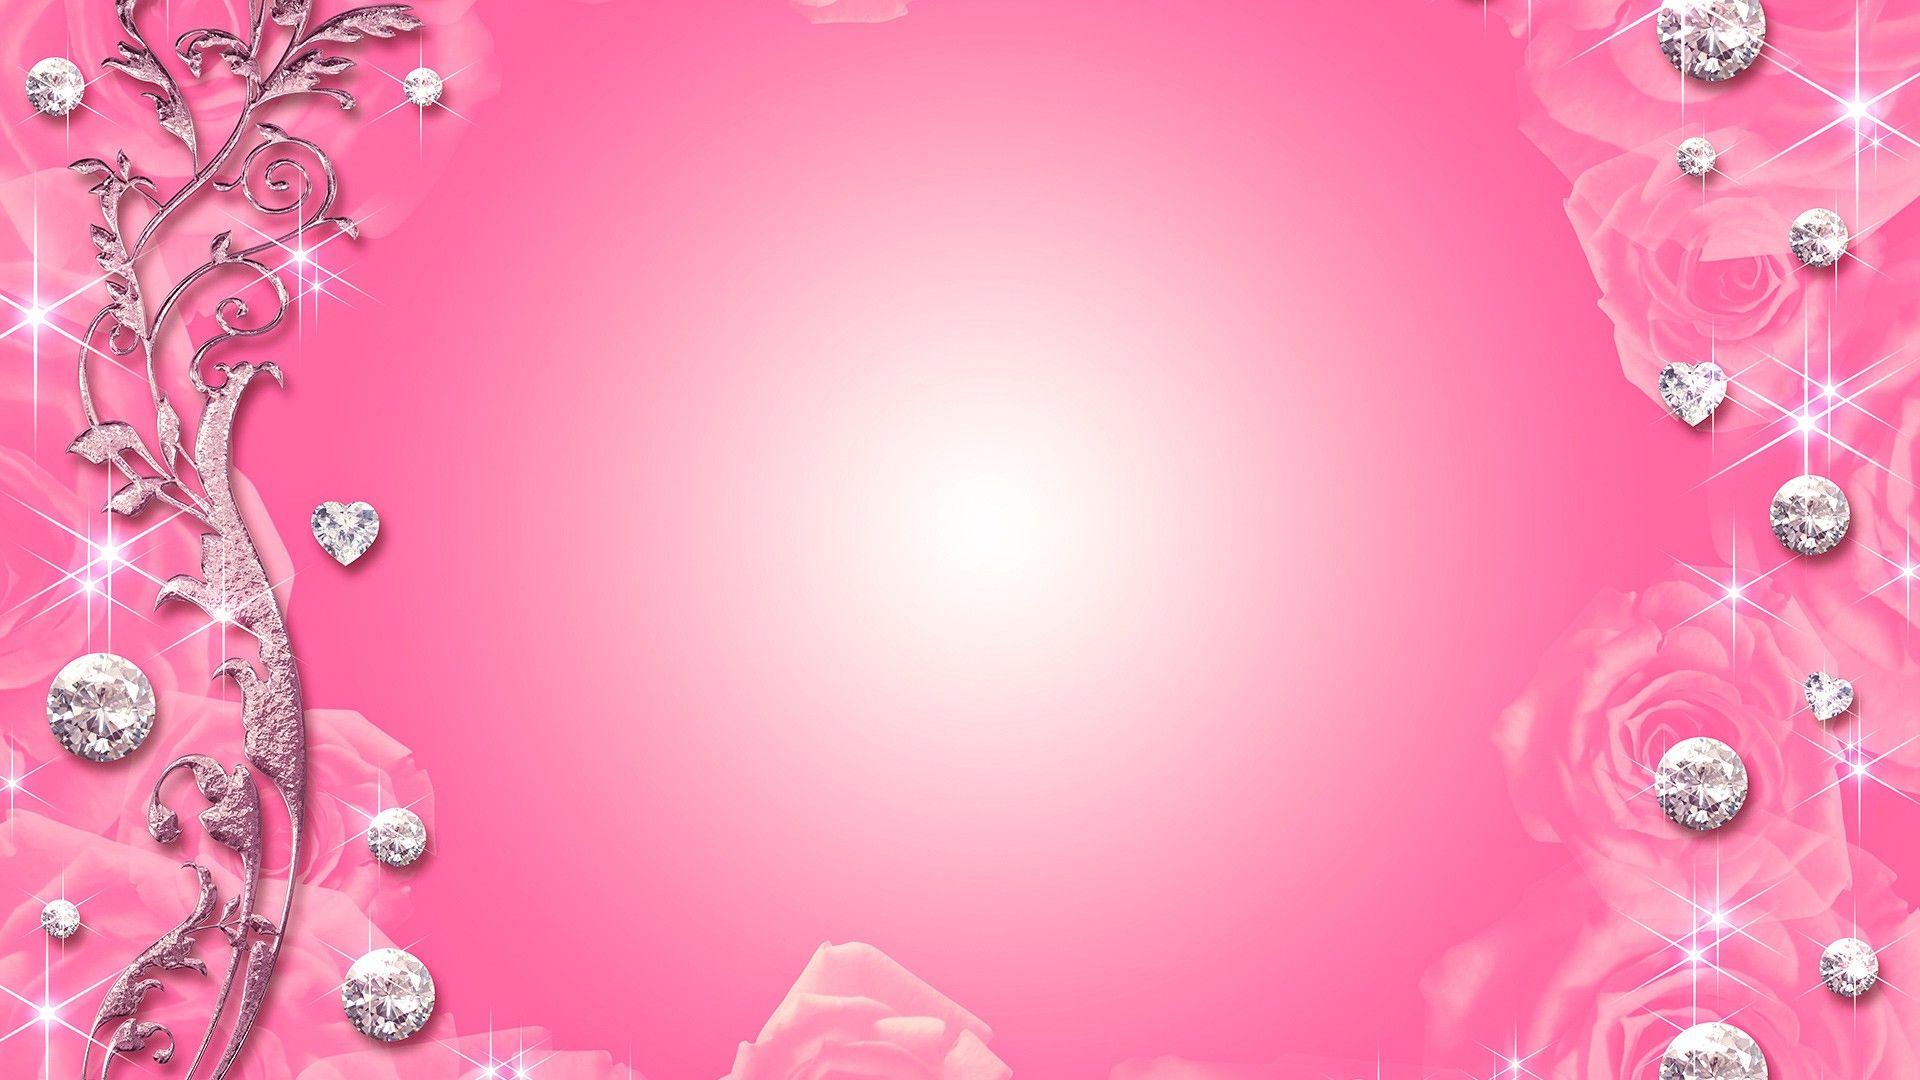 Pink Glitter HD Wallpapers on WallpaperDog